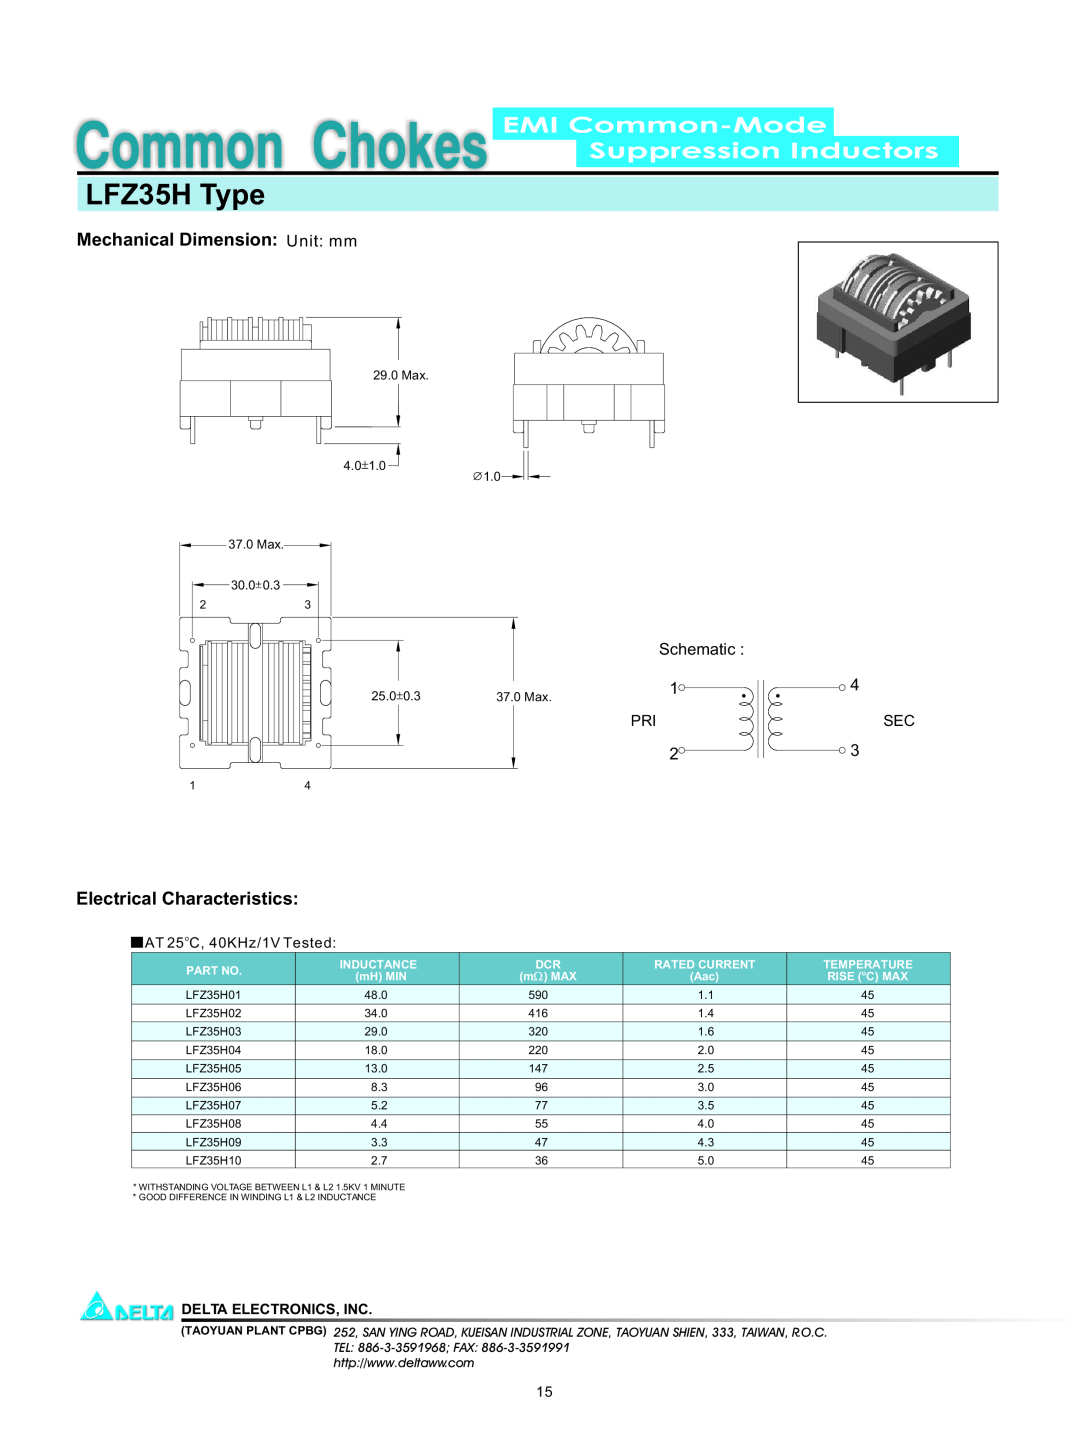 Delta Electronics dimensions LFZ35H Type, EMI Common-Mode Suppression Inductors, Mechanical Dimension Unit mm, mH MIN 